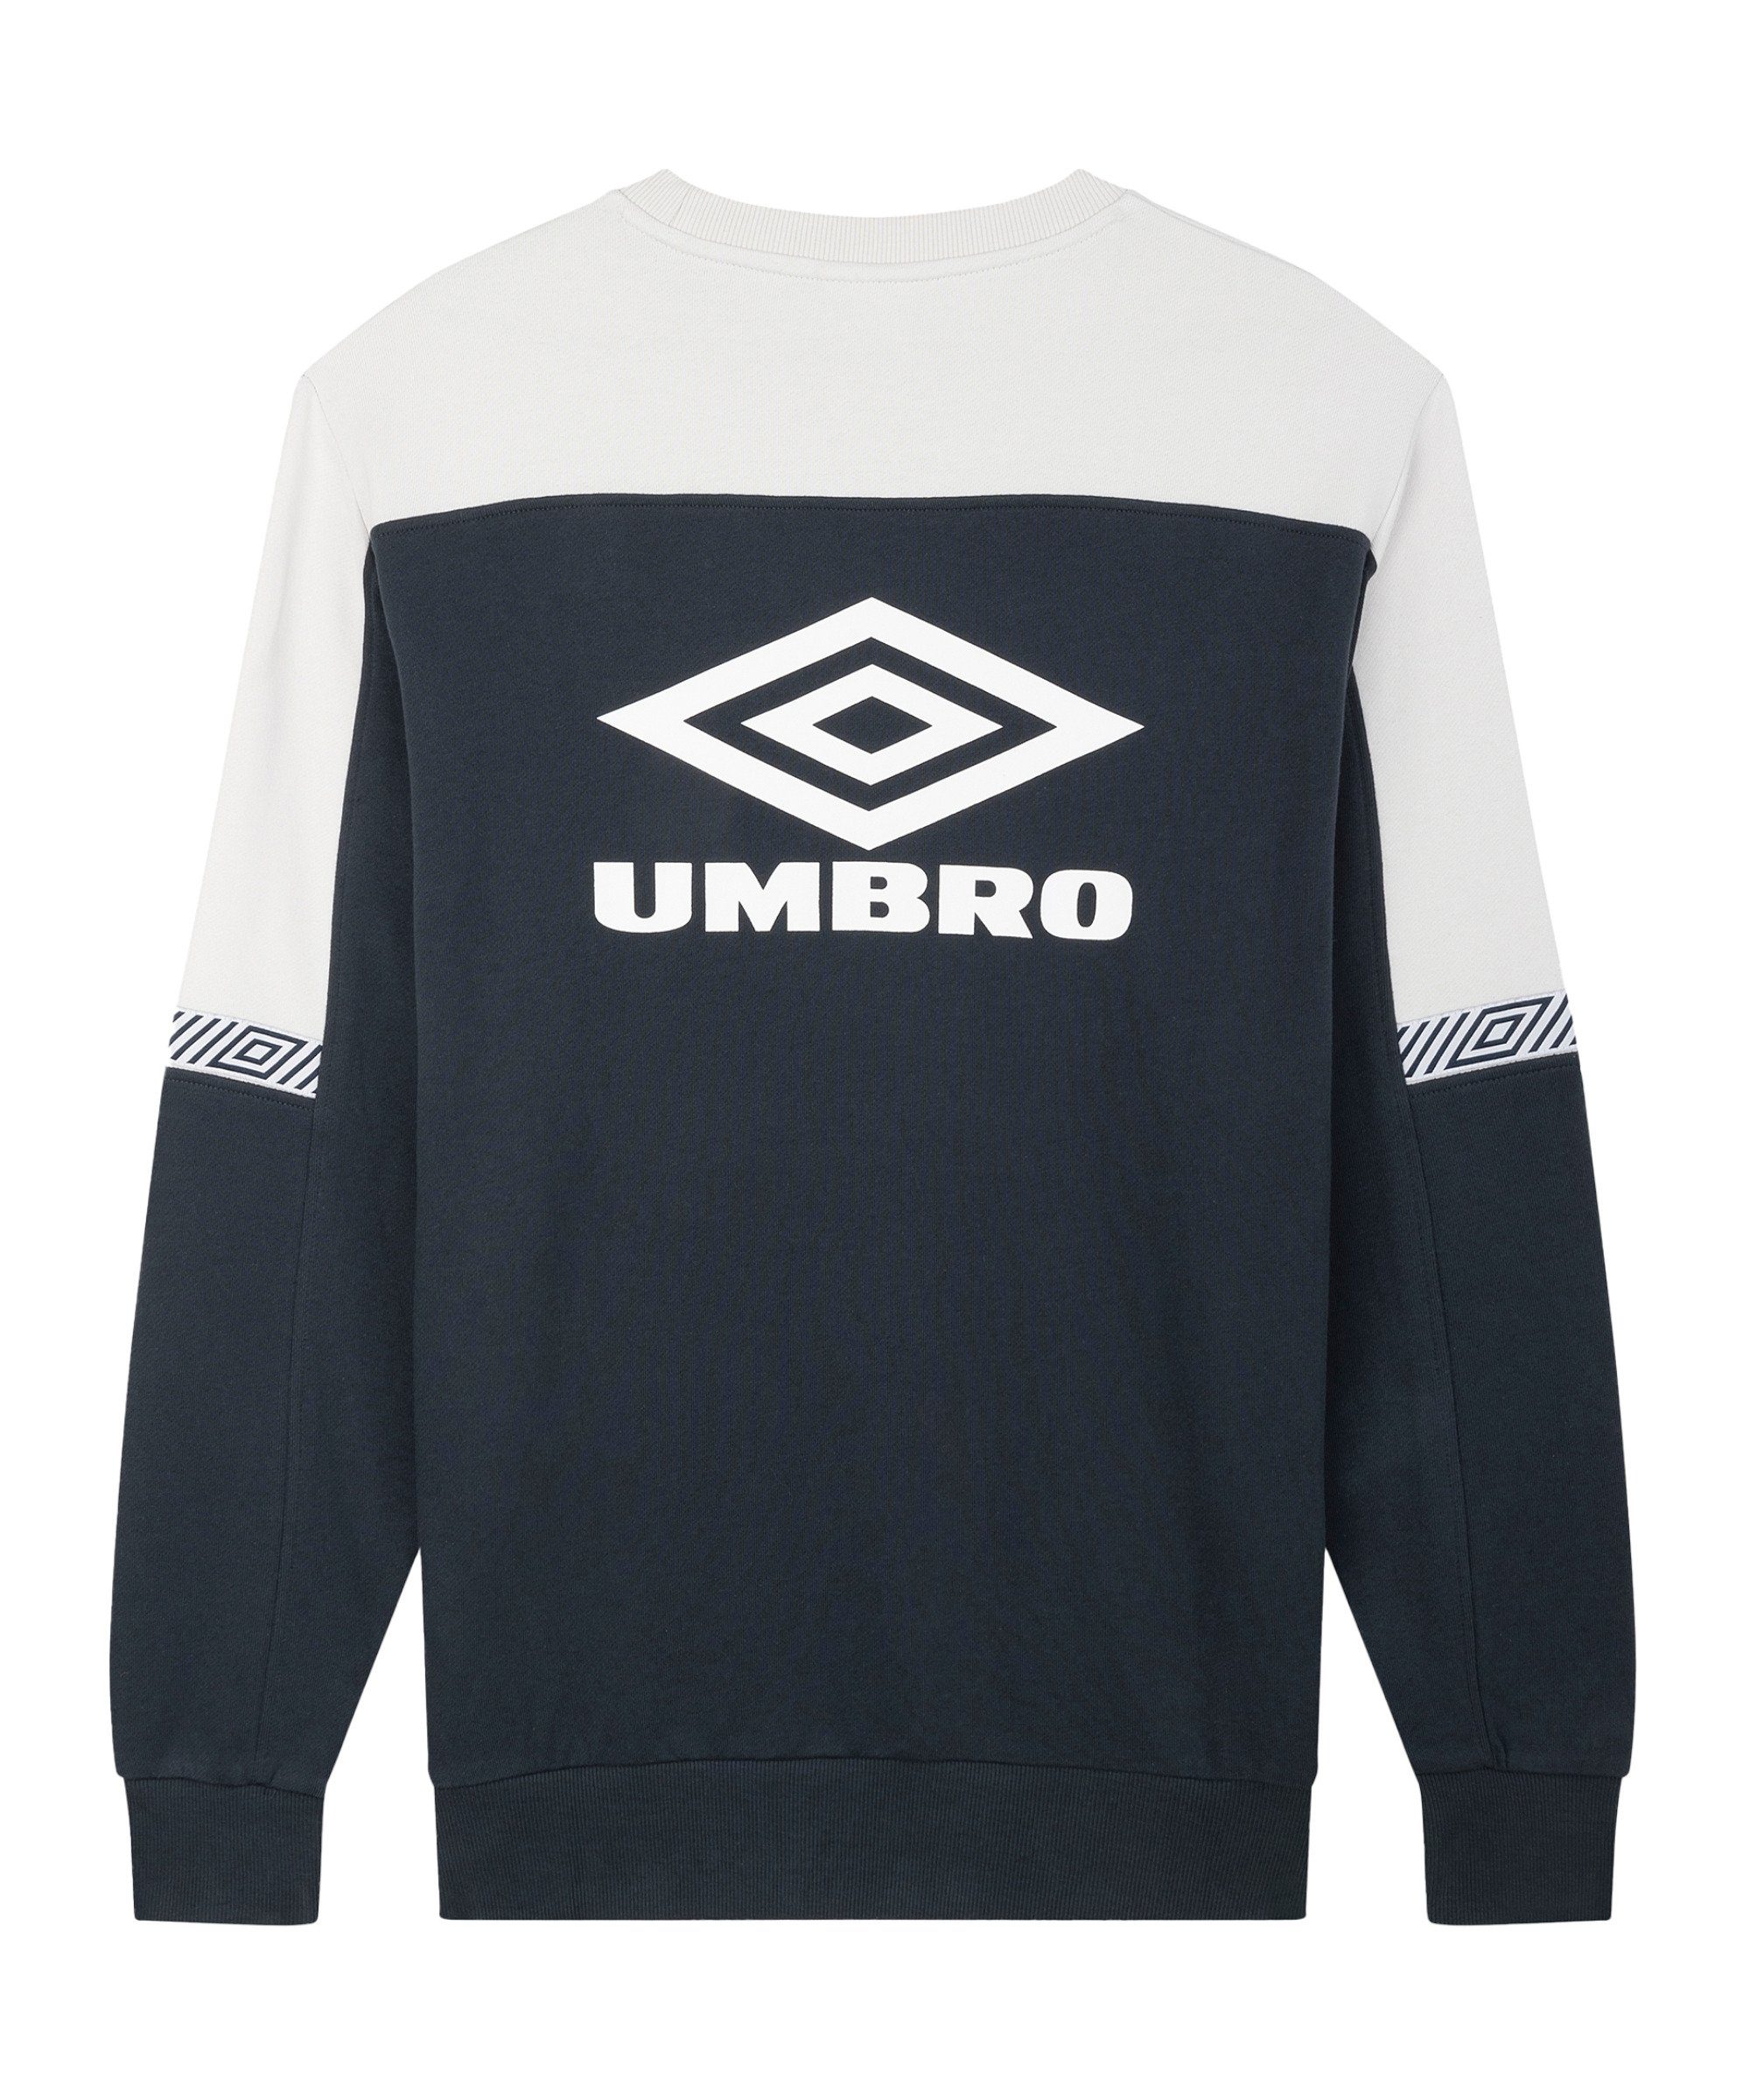 Club Umbro Sports graublau Sweatshirt Style Sweatshirt